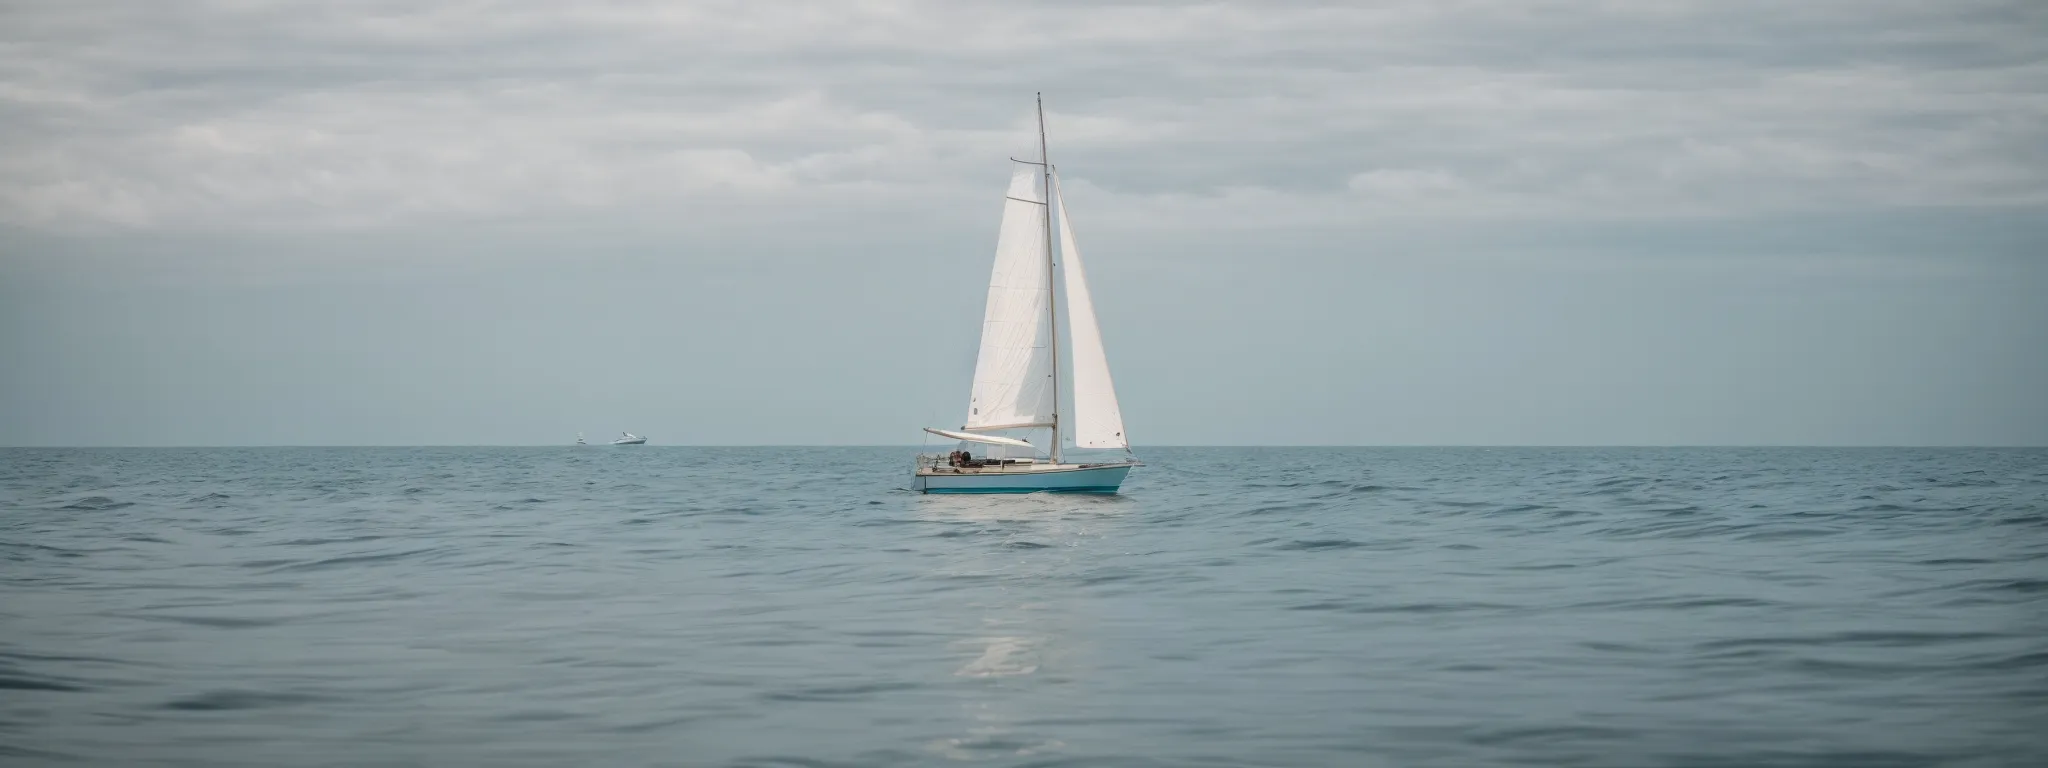 a small sailboat gliding through a calm sea, avoiding visible underwater obstacles.